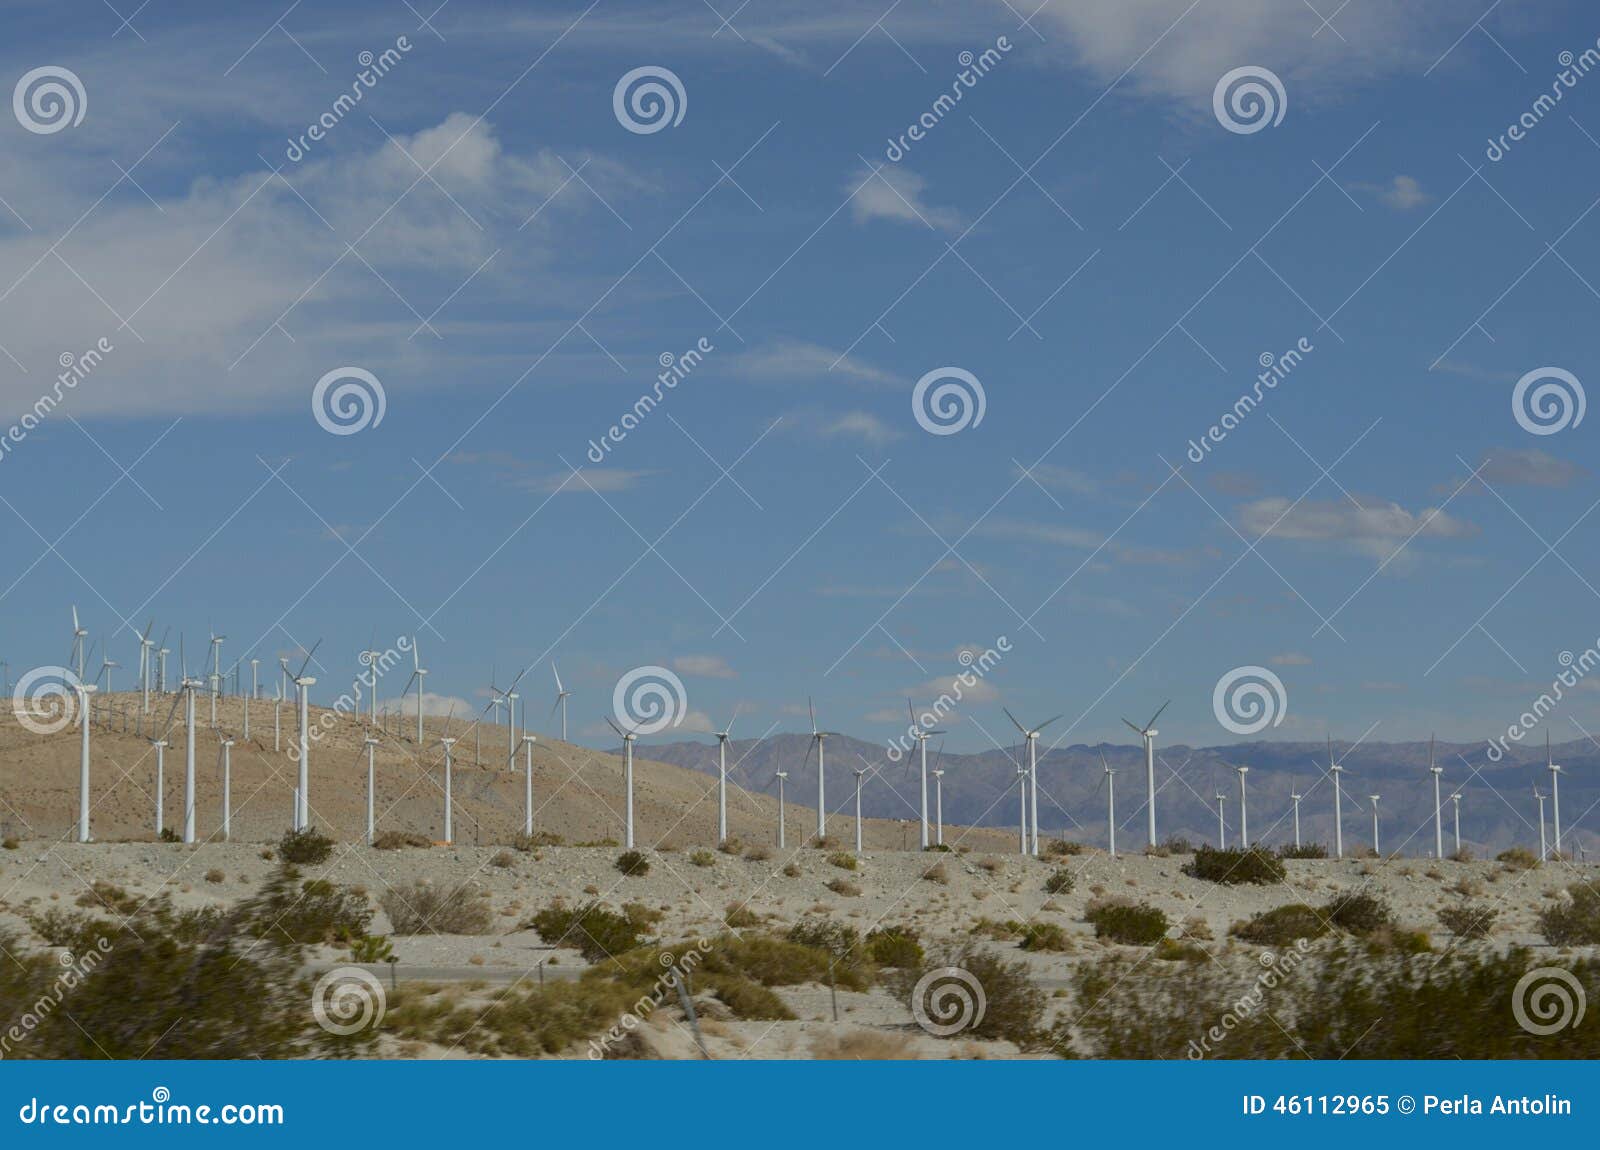 Light generators stock image. Image of dessert, mountains - 46112965